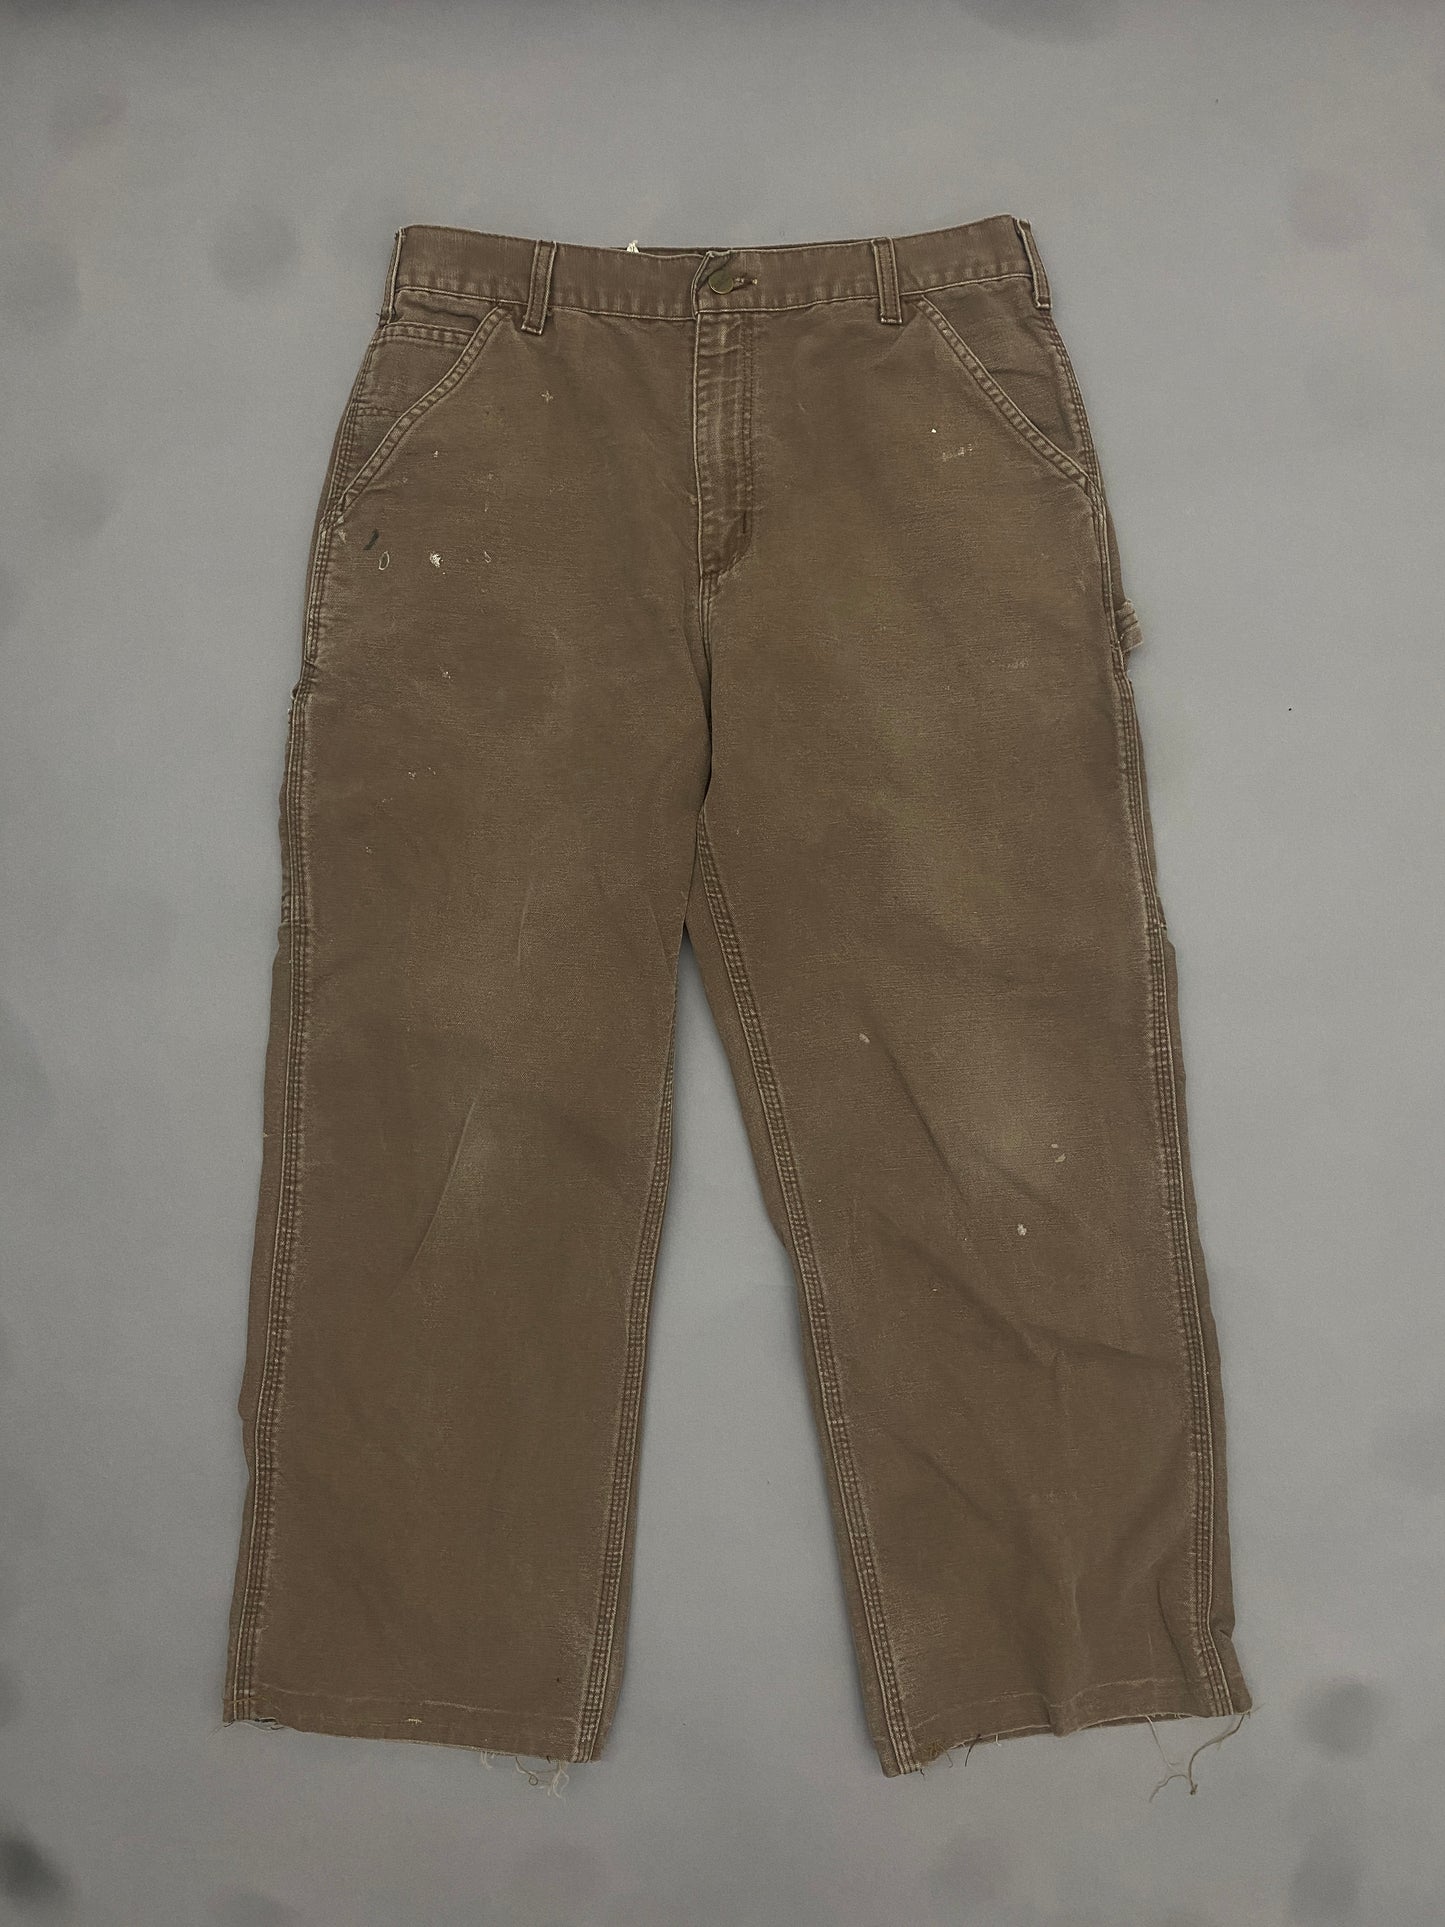 Pantalones Carhartt Carpenter Vintage - 34 x 30